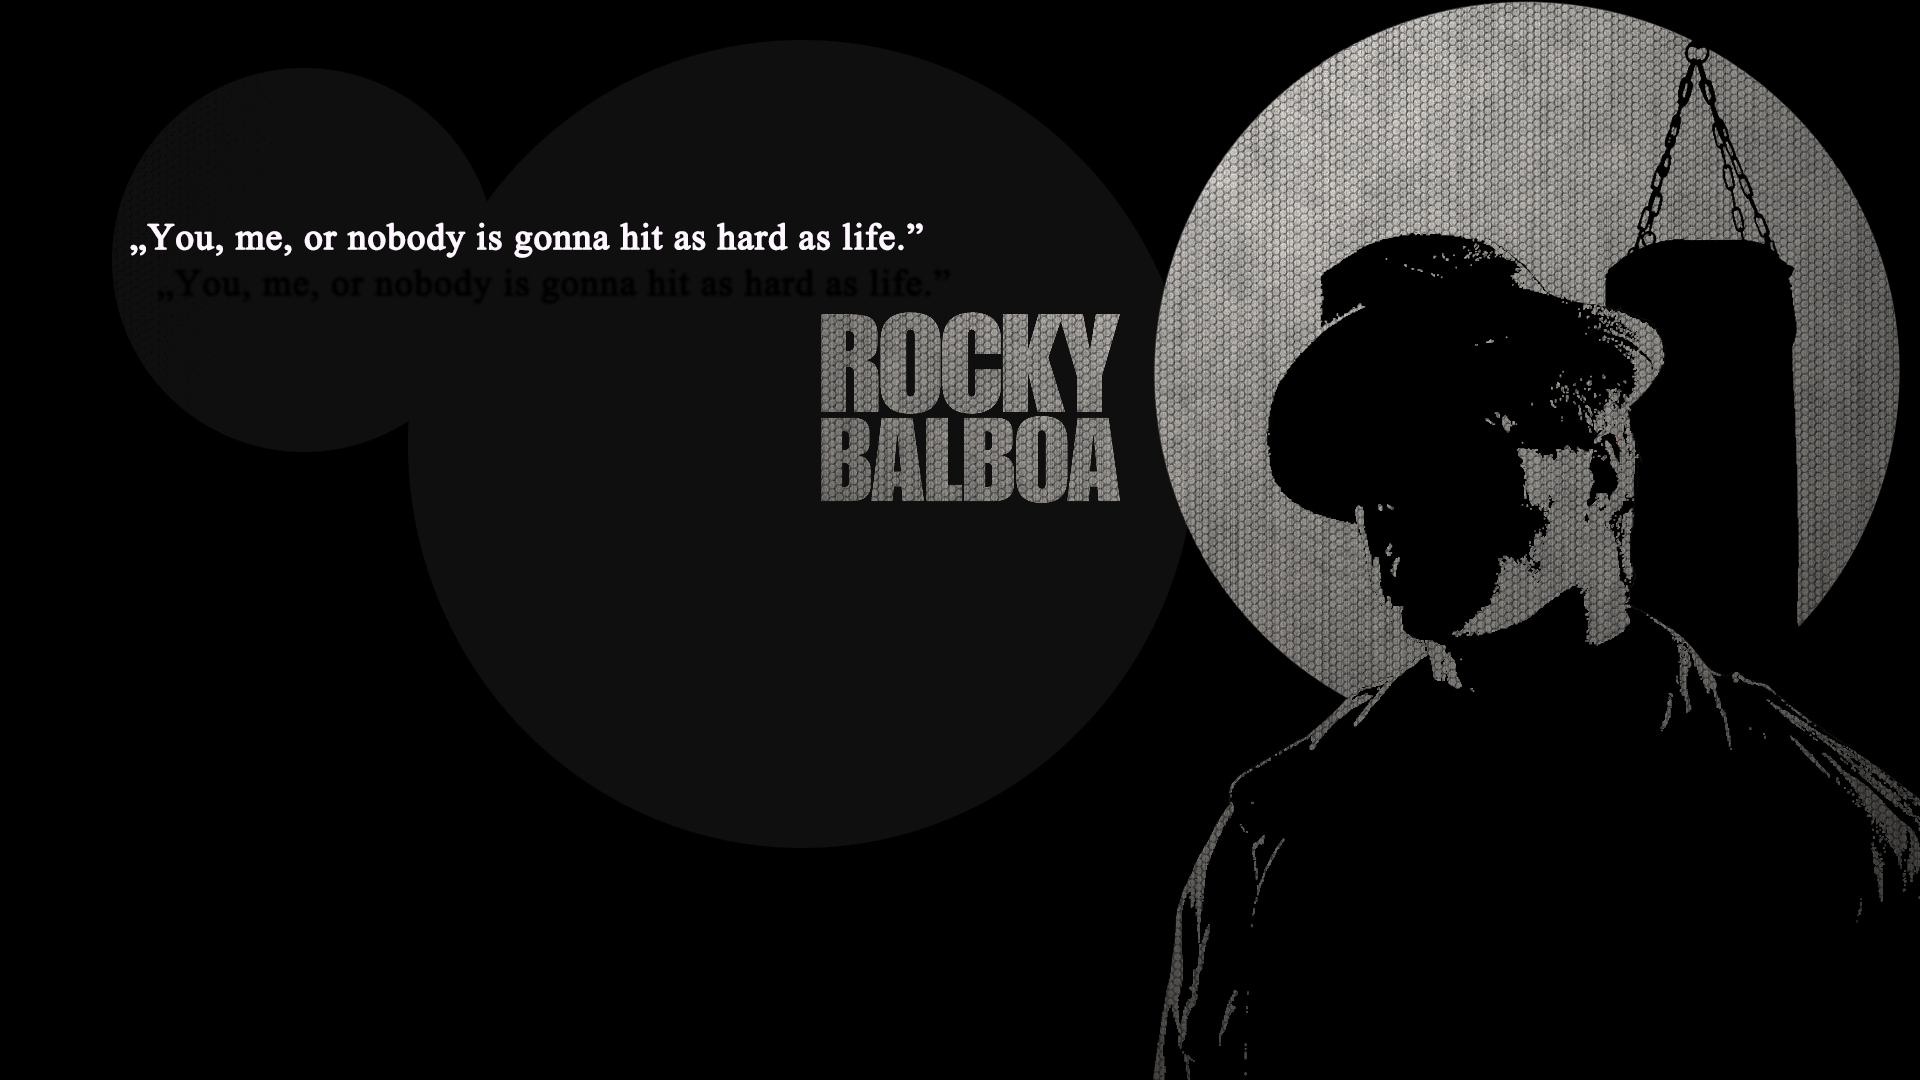 Rocky Balboa Wallpaper, 38 Rocky Balboa Photo and Picture, RT762